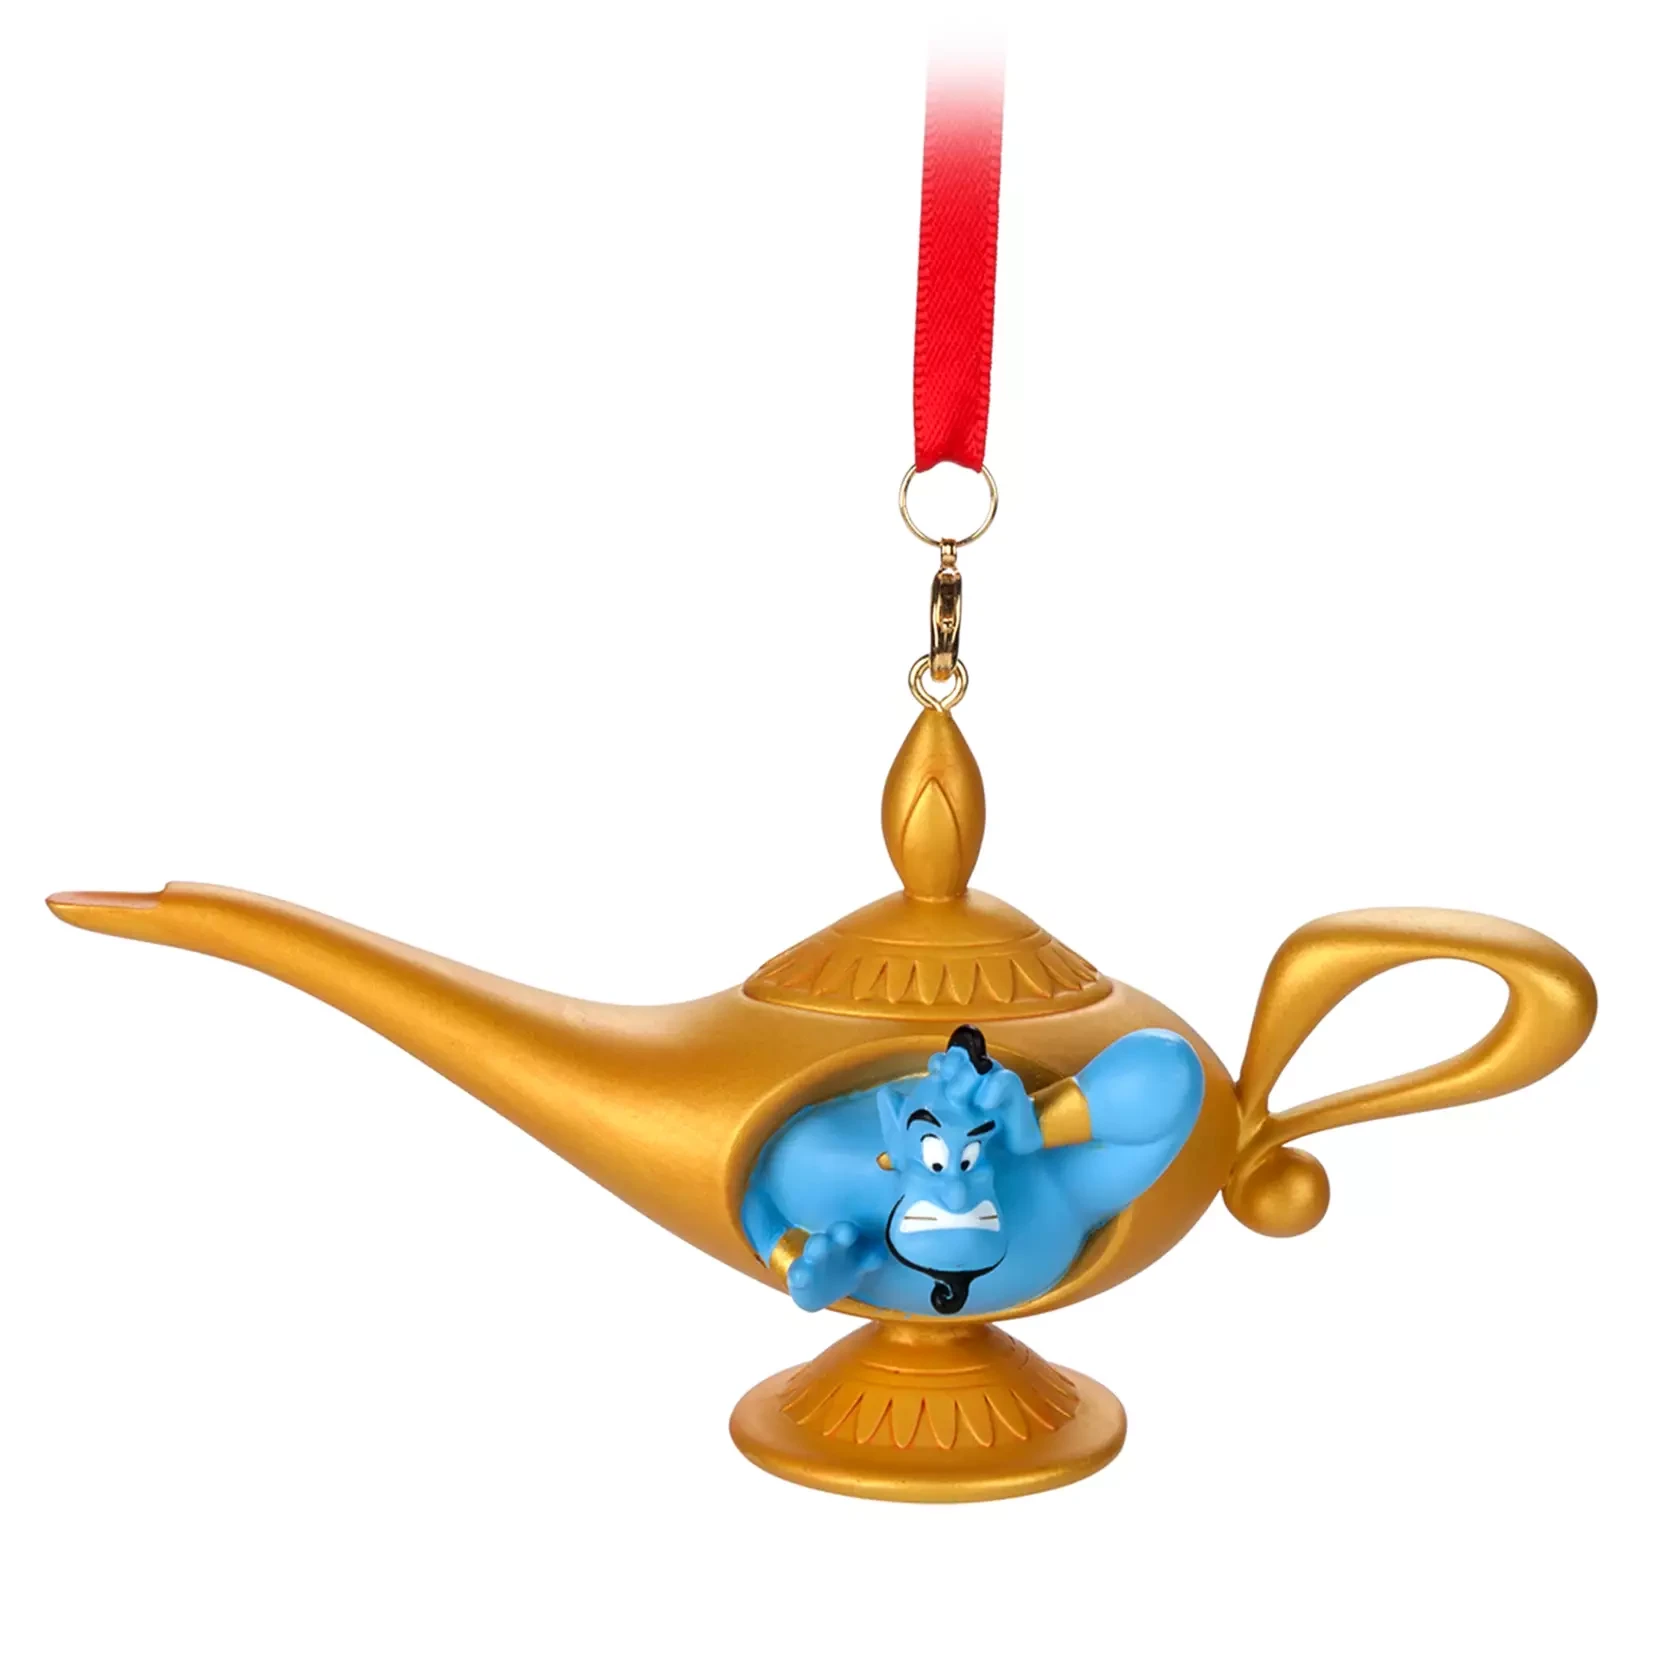 item Ornament - Genie Lamp - Sketchbook Collection 6506059317367fmtwebpqlt70wid1680h